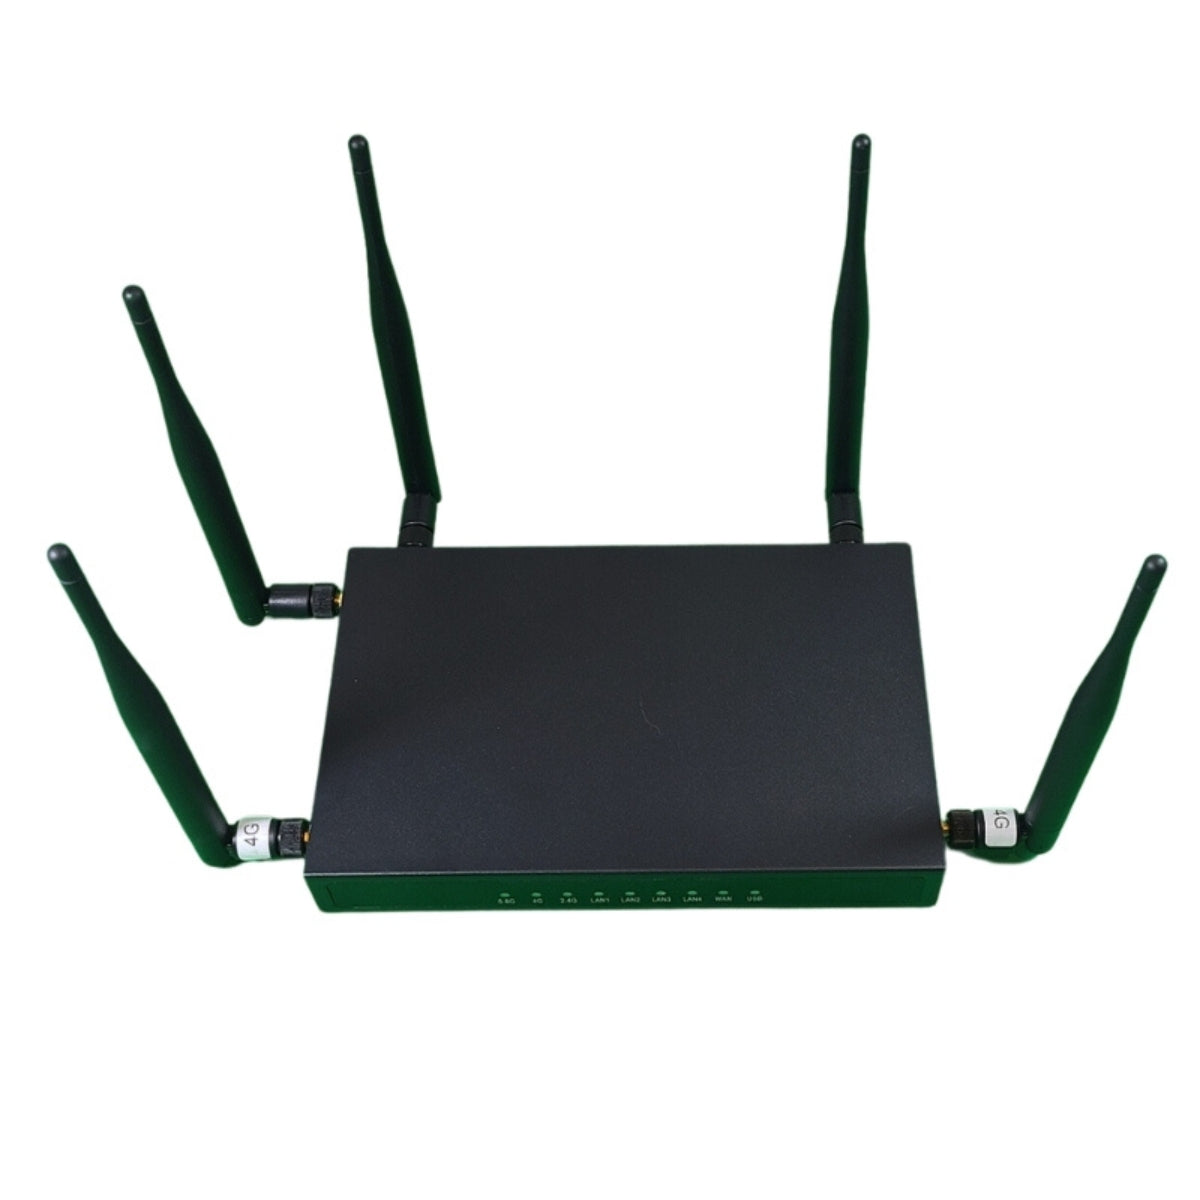 NEXR5GO Cellular Ready Router (PoE) - Dual Band (2.4GHz & 5.8GHz) WiFi